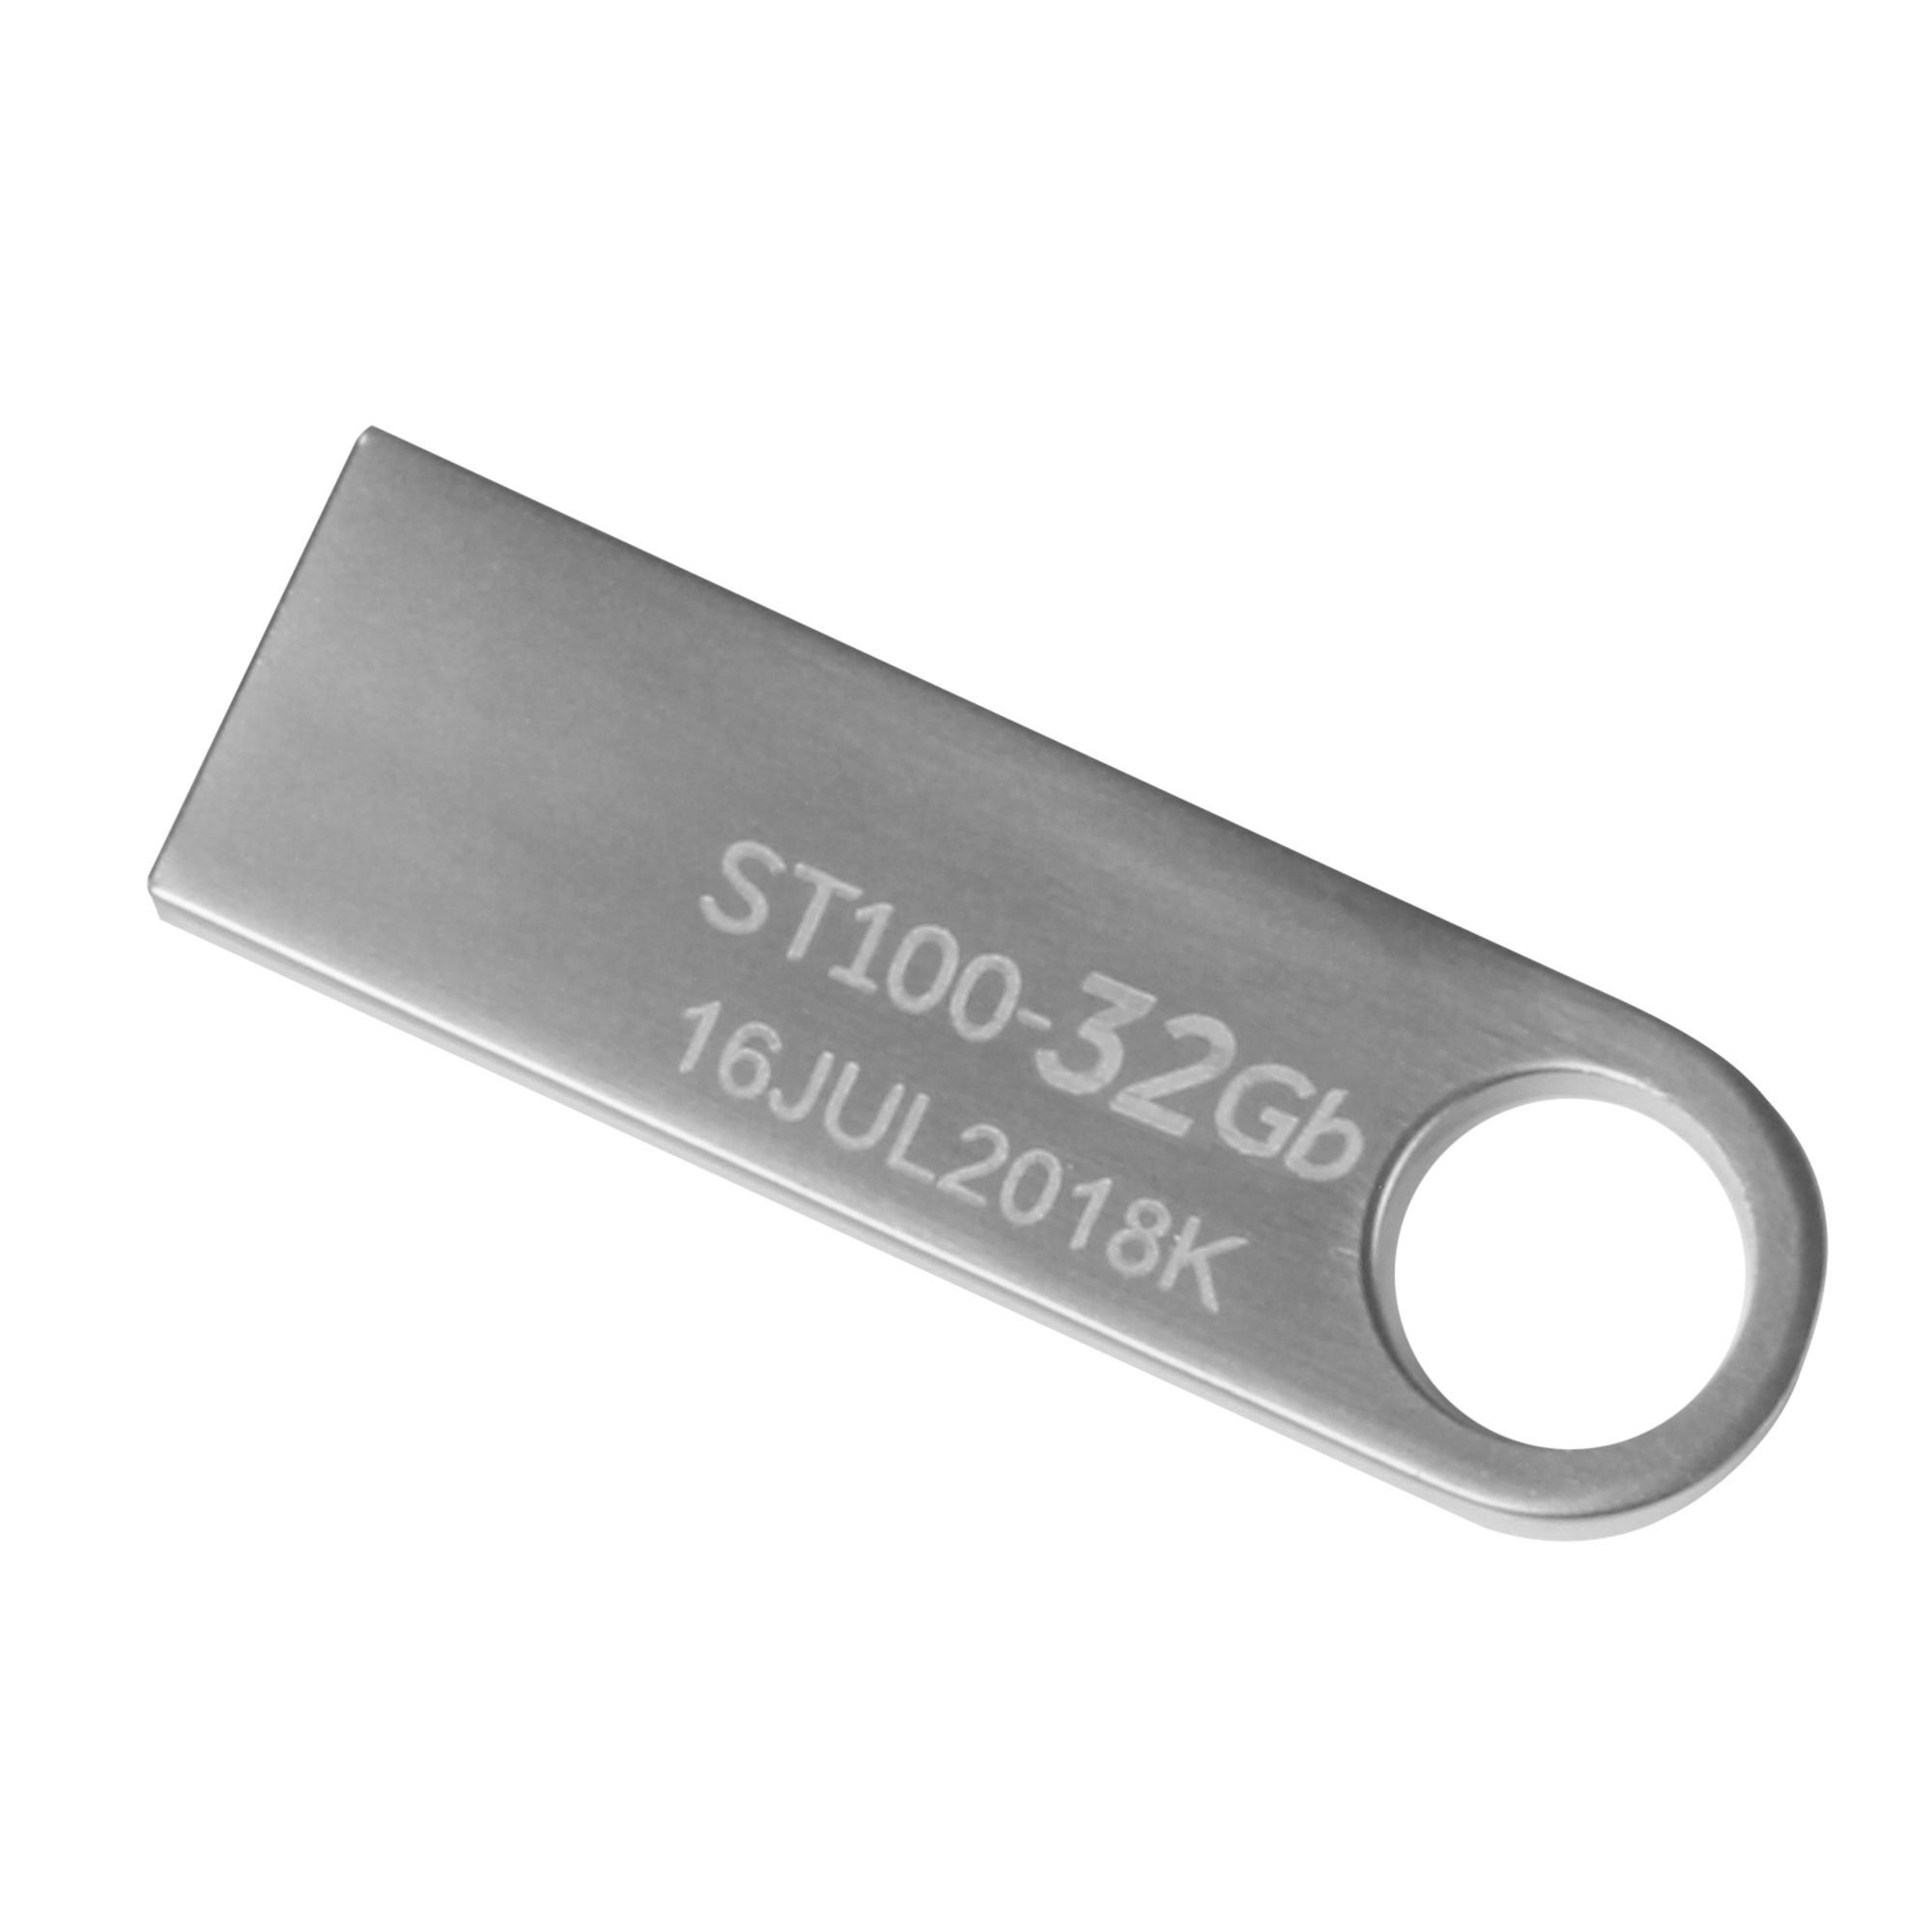 MEMORIA USB STYLOS 32 GB ST100 FLASH 2.0 PLATA STMUSB3B